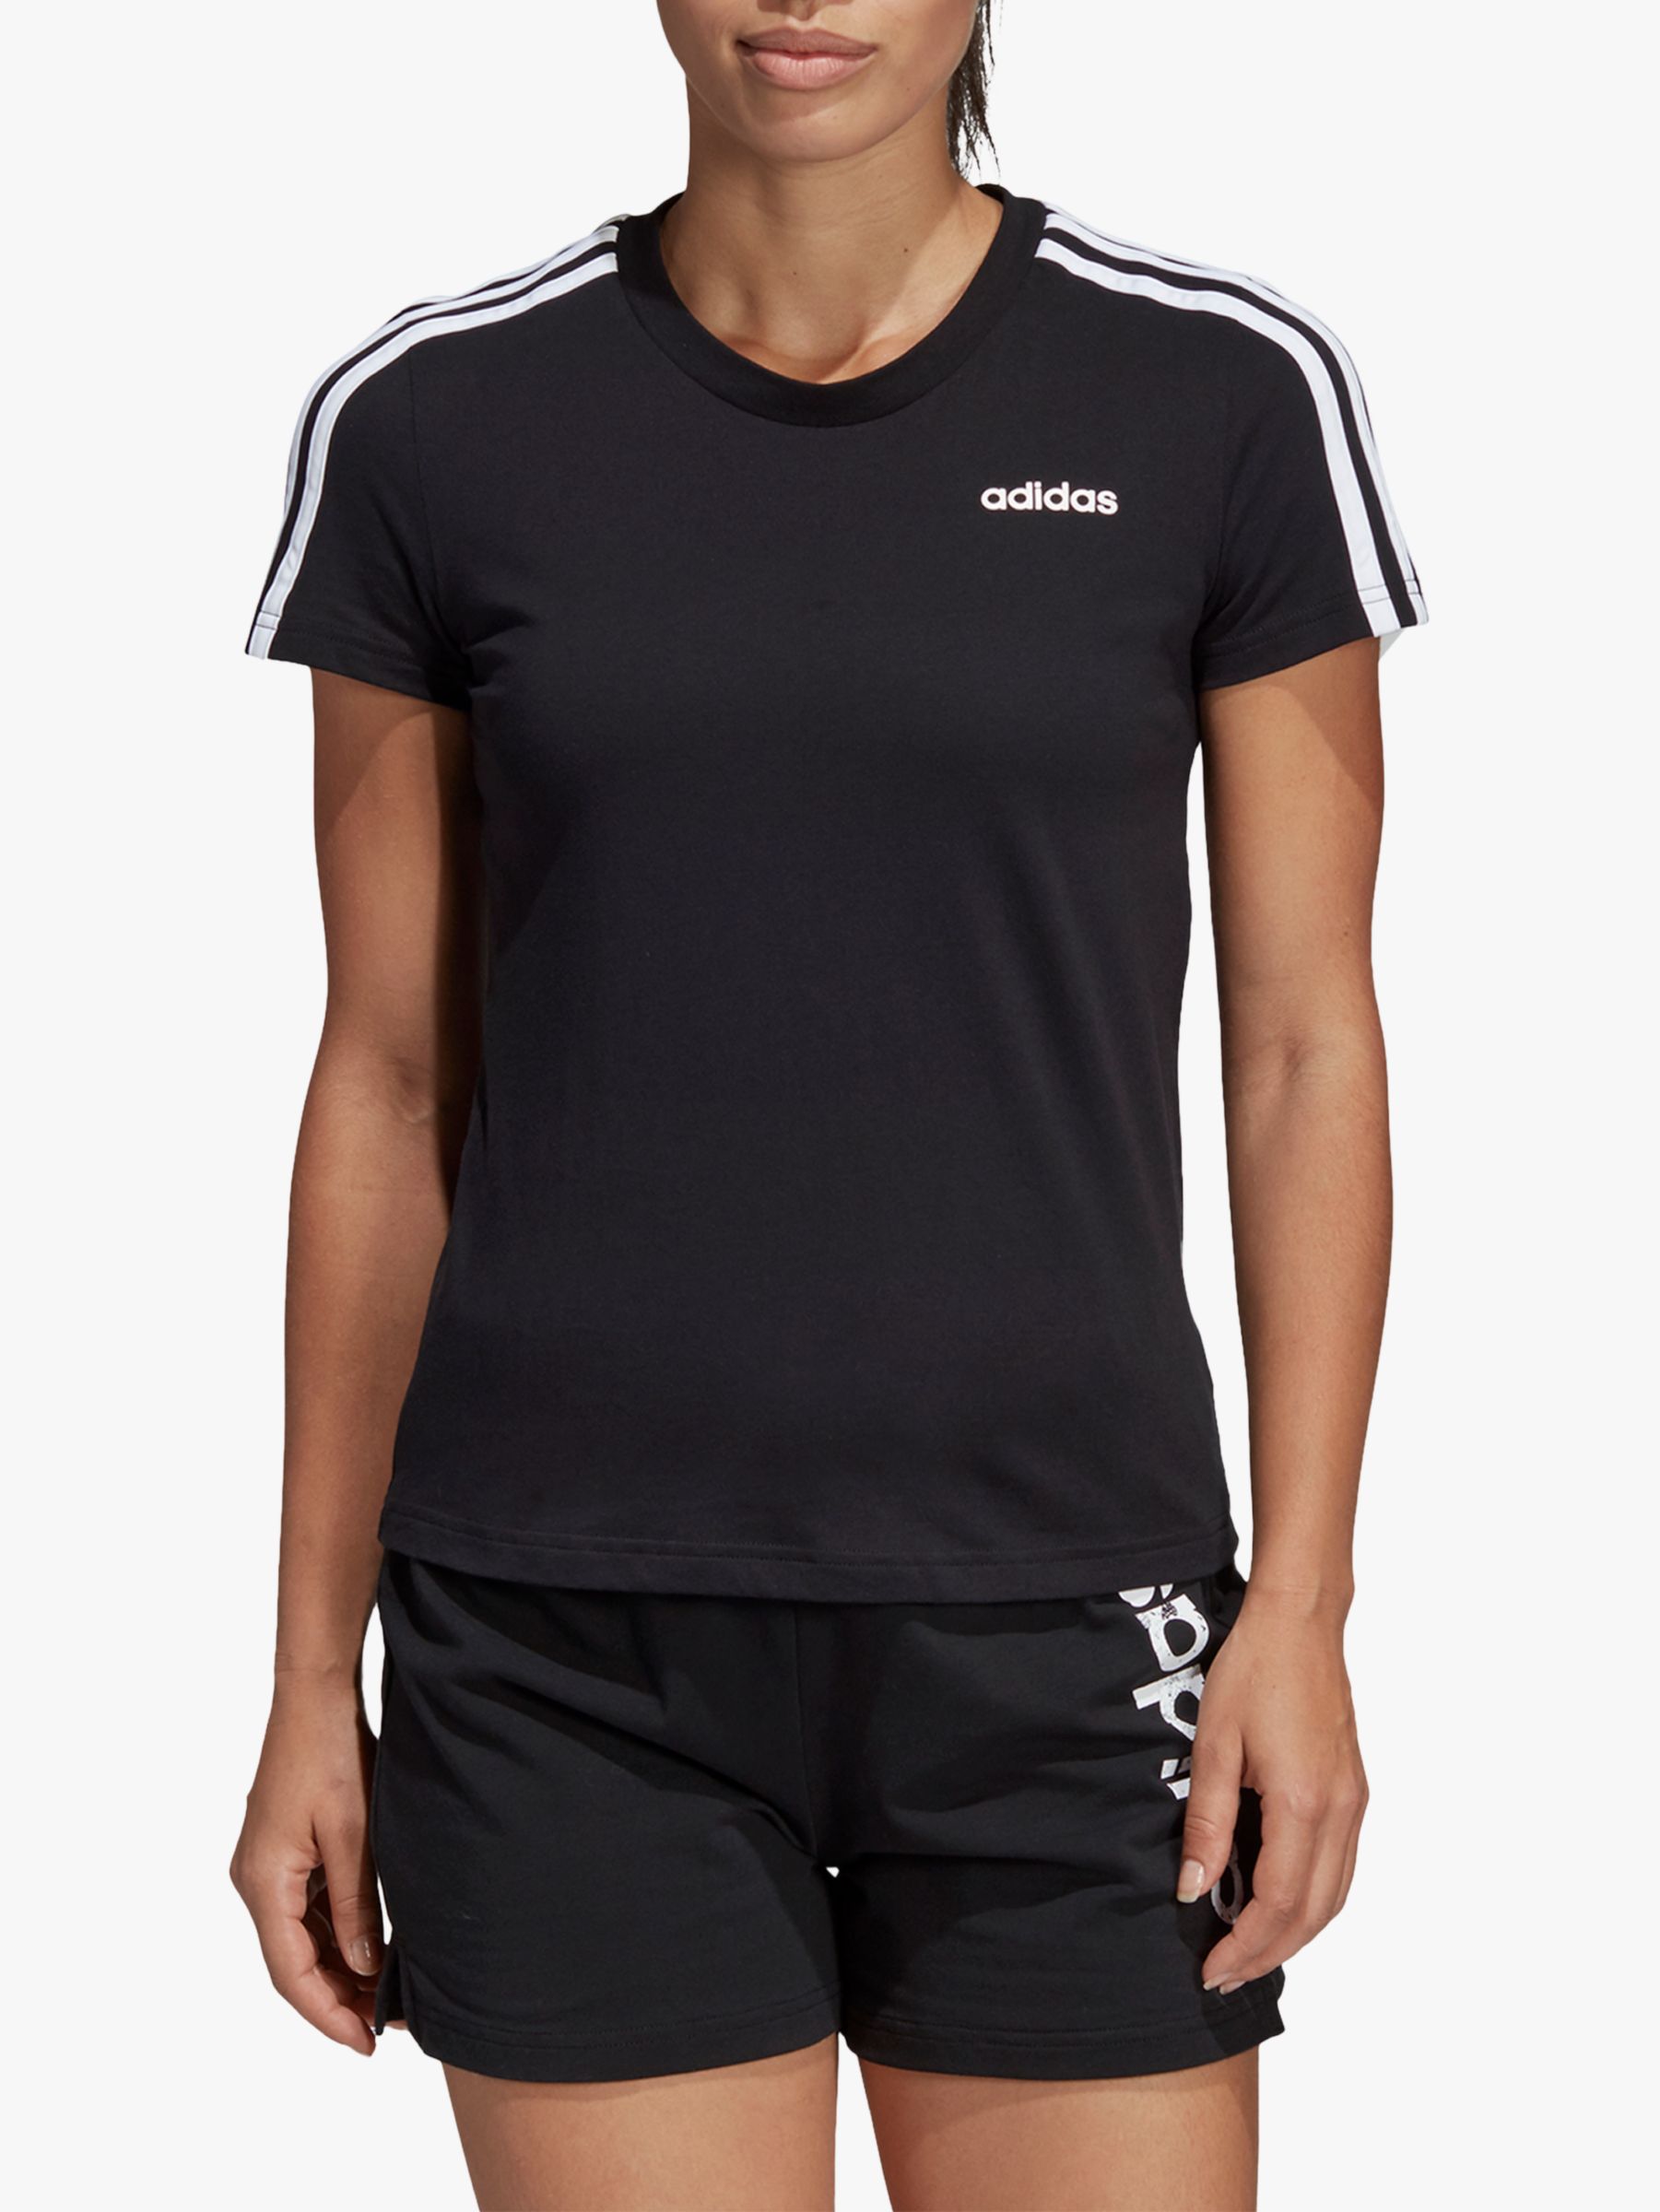 adidas Essentials 3-Stripes T-Shirt, Black/White